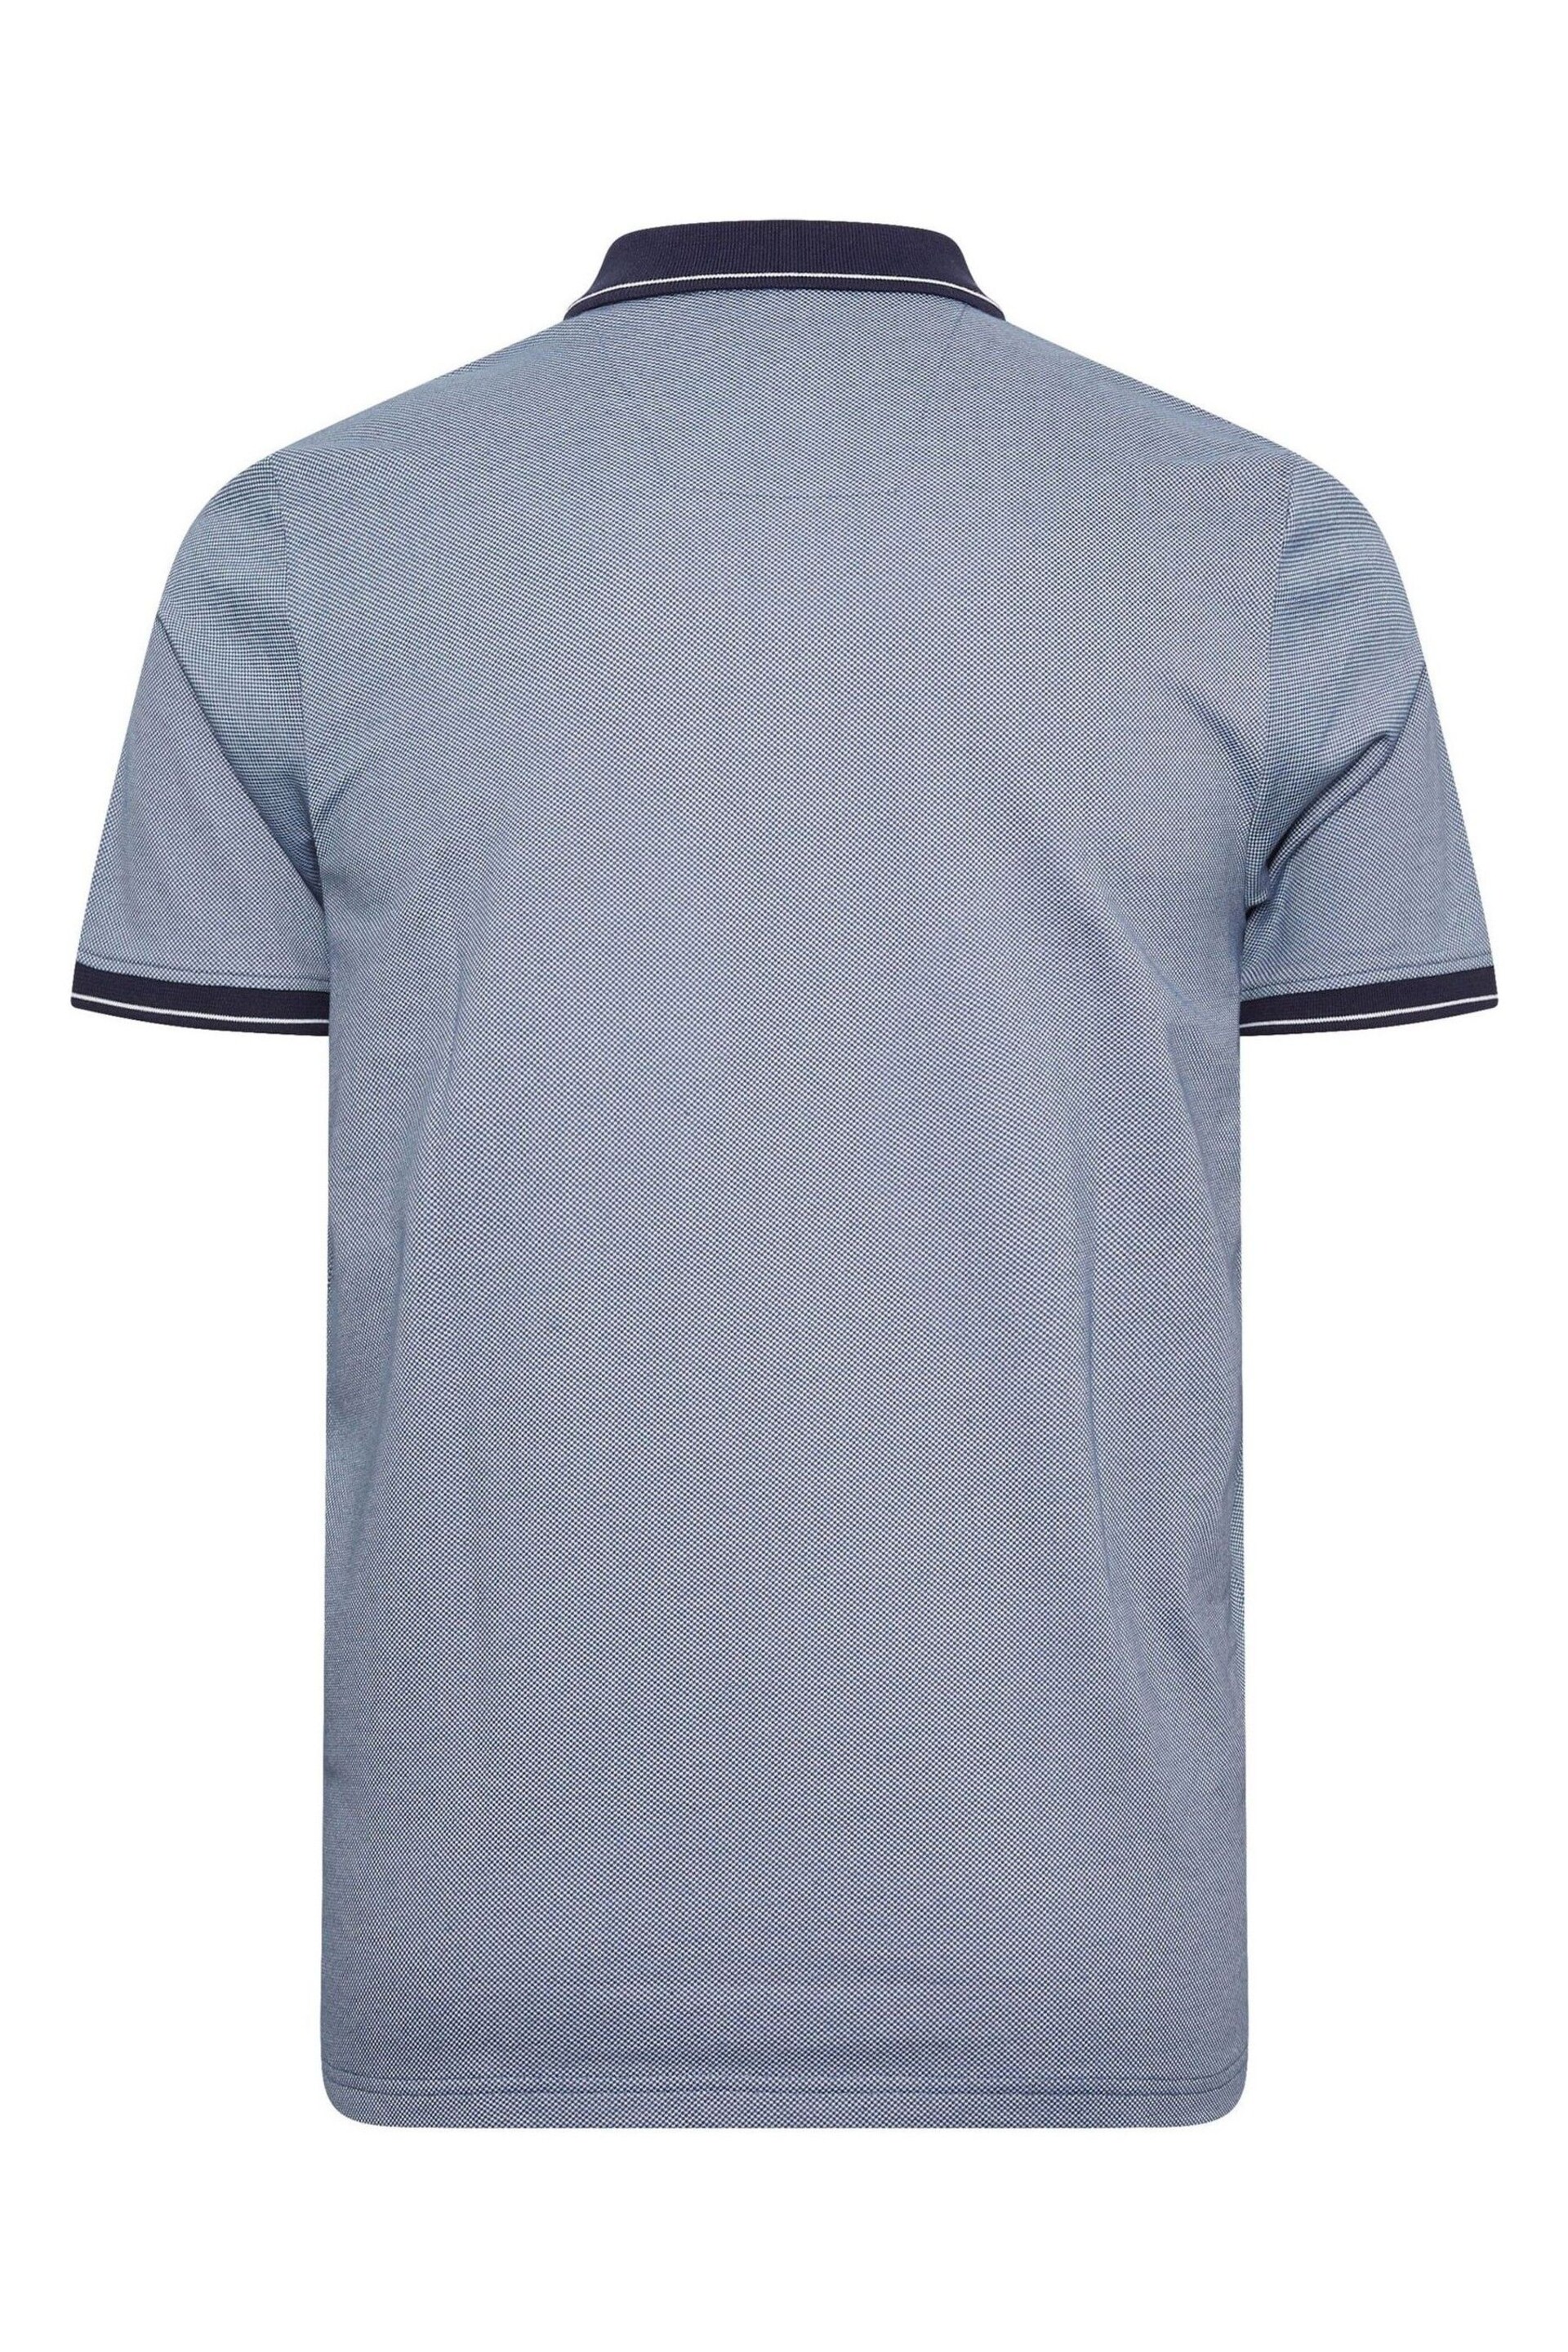 BadRhino Big & Tall Blue Textured Zip Neck Polo Shirt - Image 3 of 3